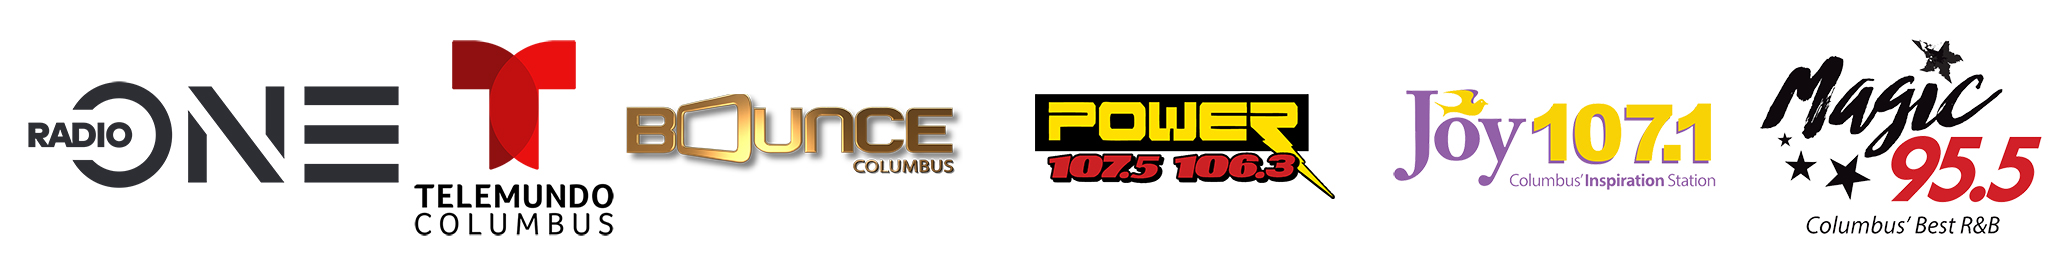 Urban One Radio One Columbus Cluster Logos